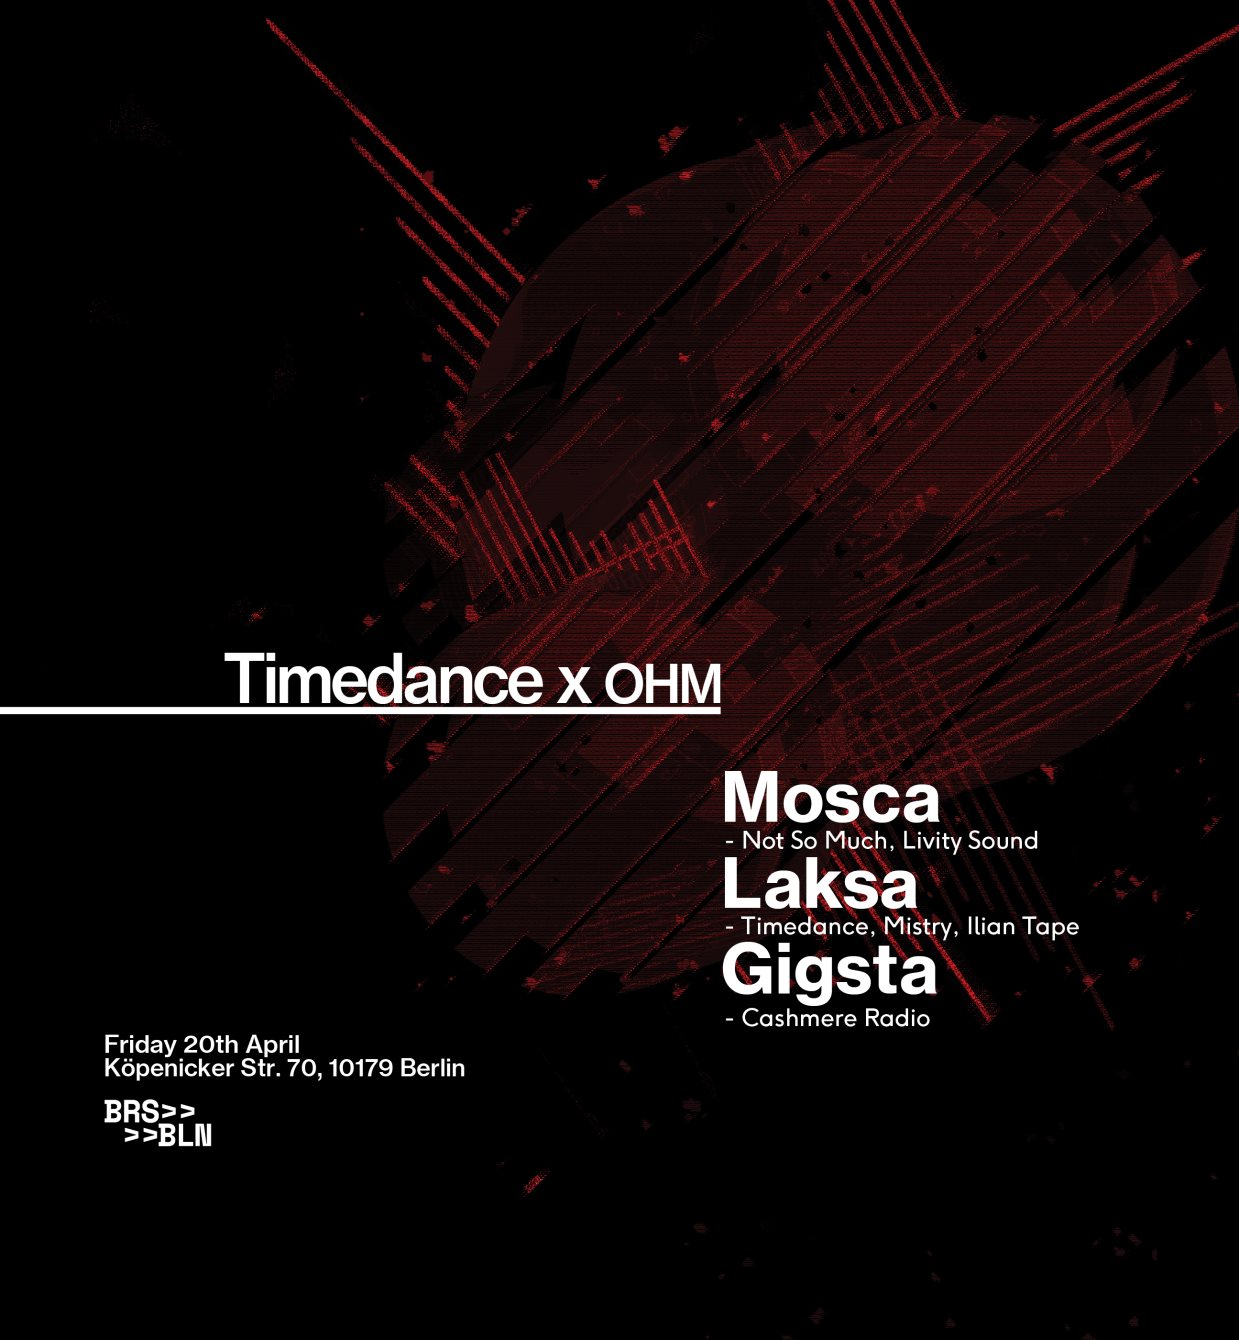 Timedance x OHM - Mosca, Laska, Gigsta - Flyer front